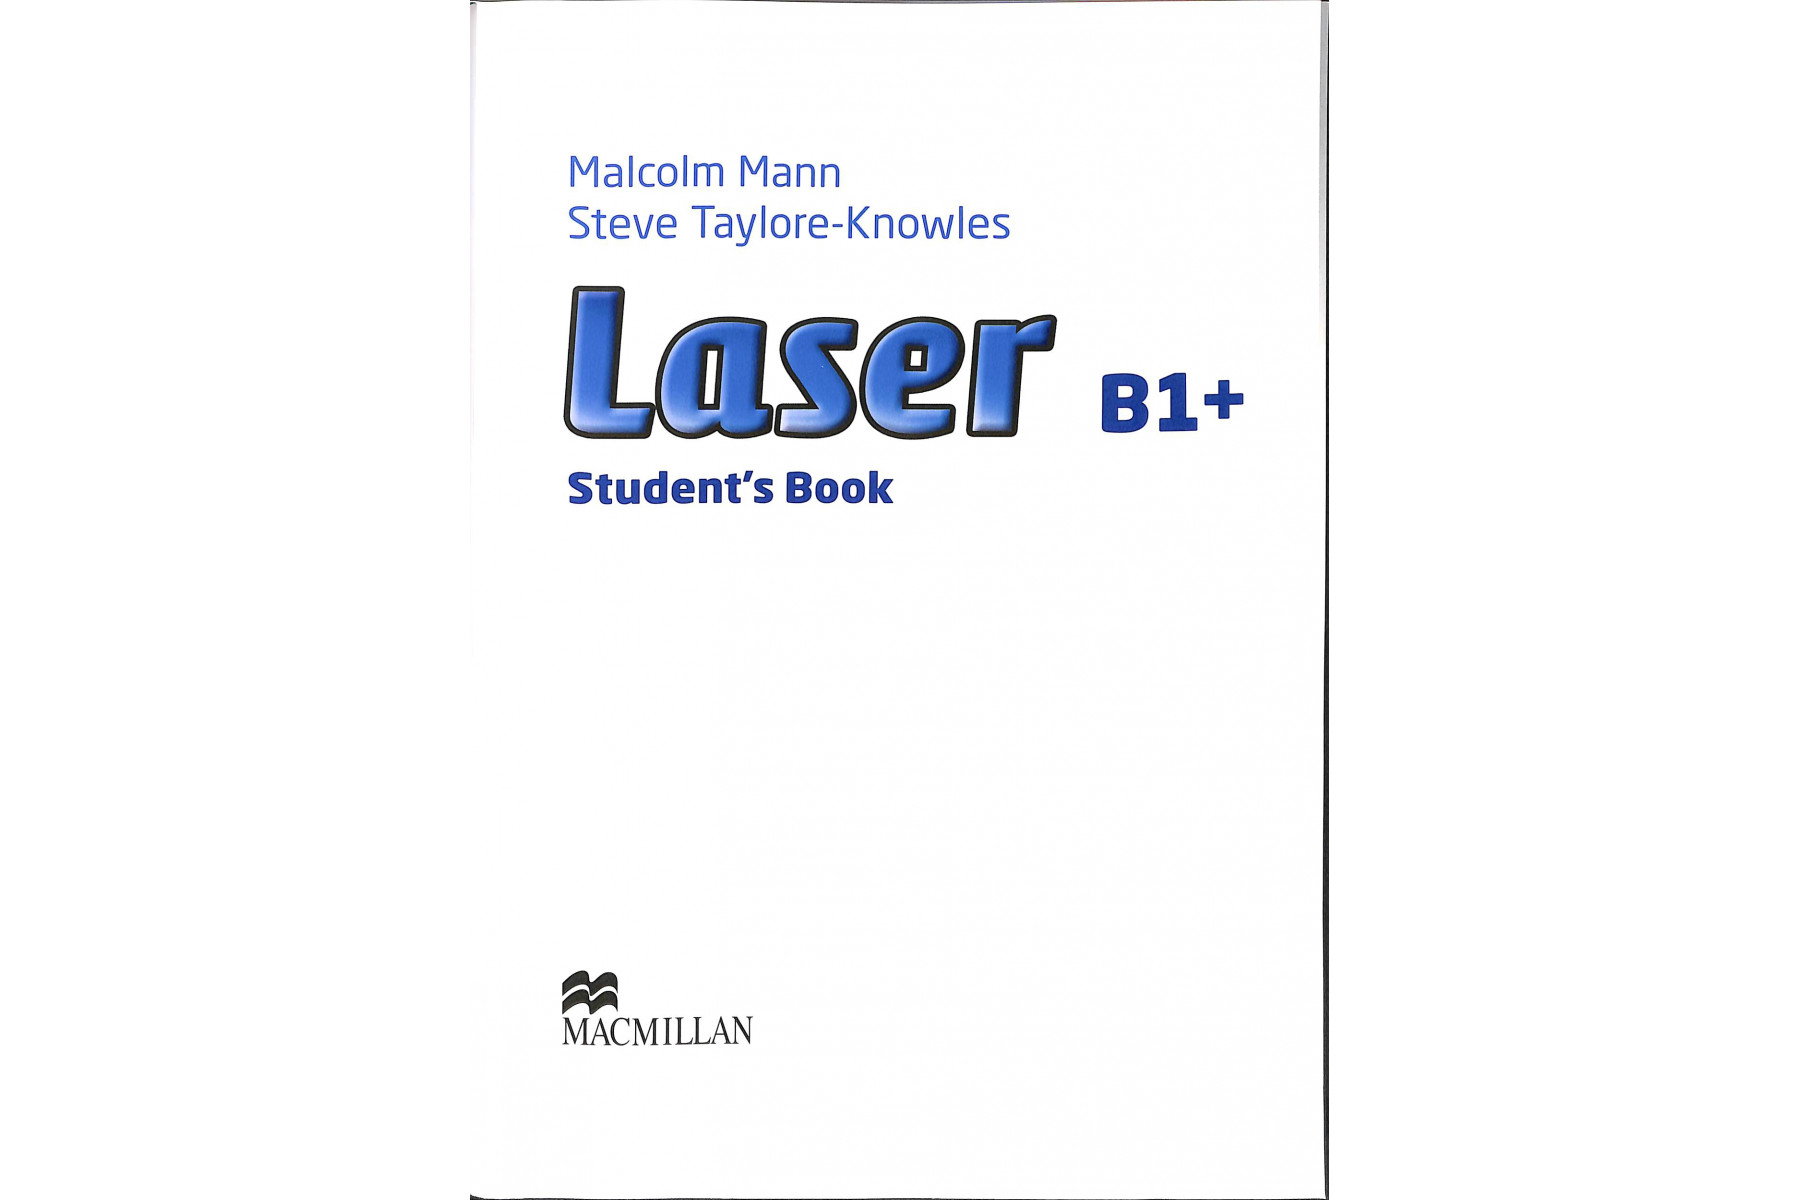 Laser 3rd Edition B1 Plus SB + CD-ROM